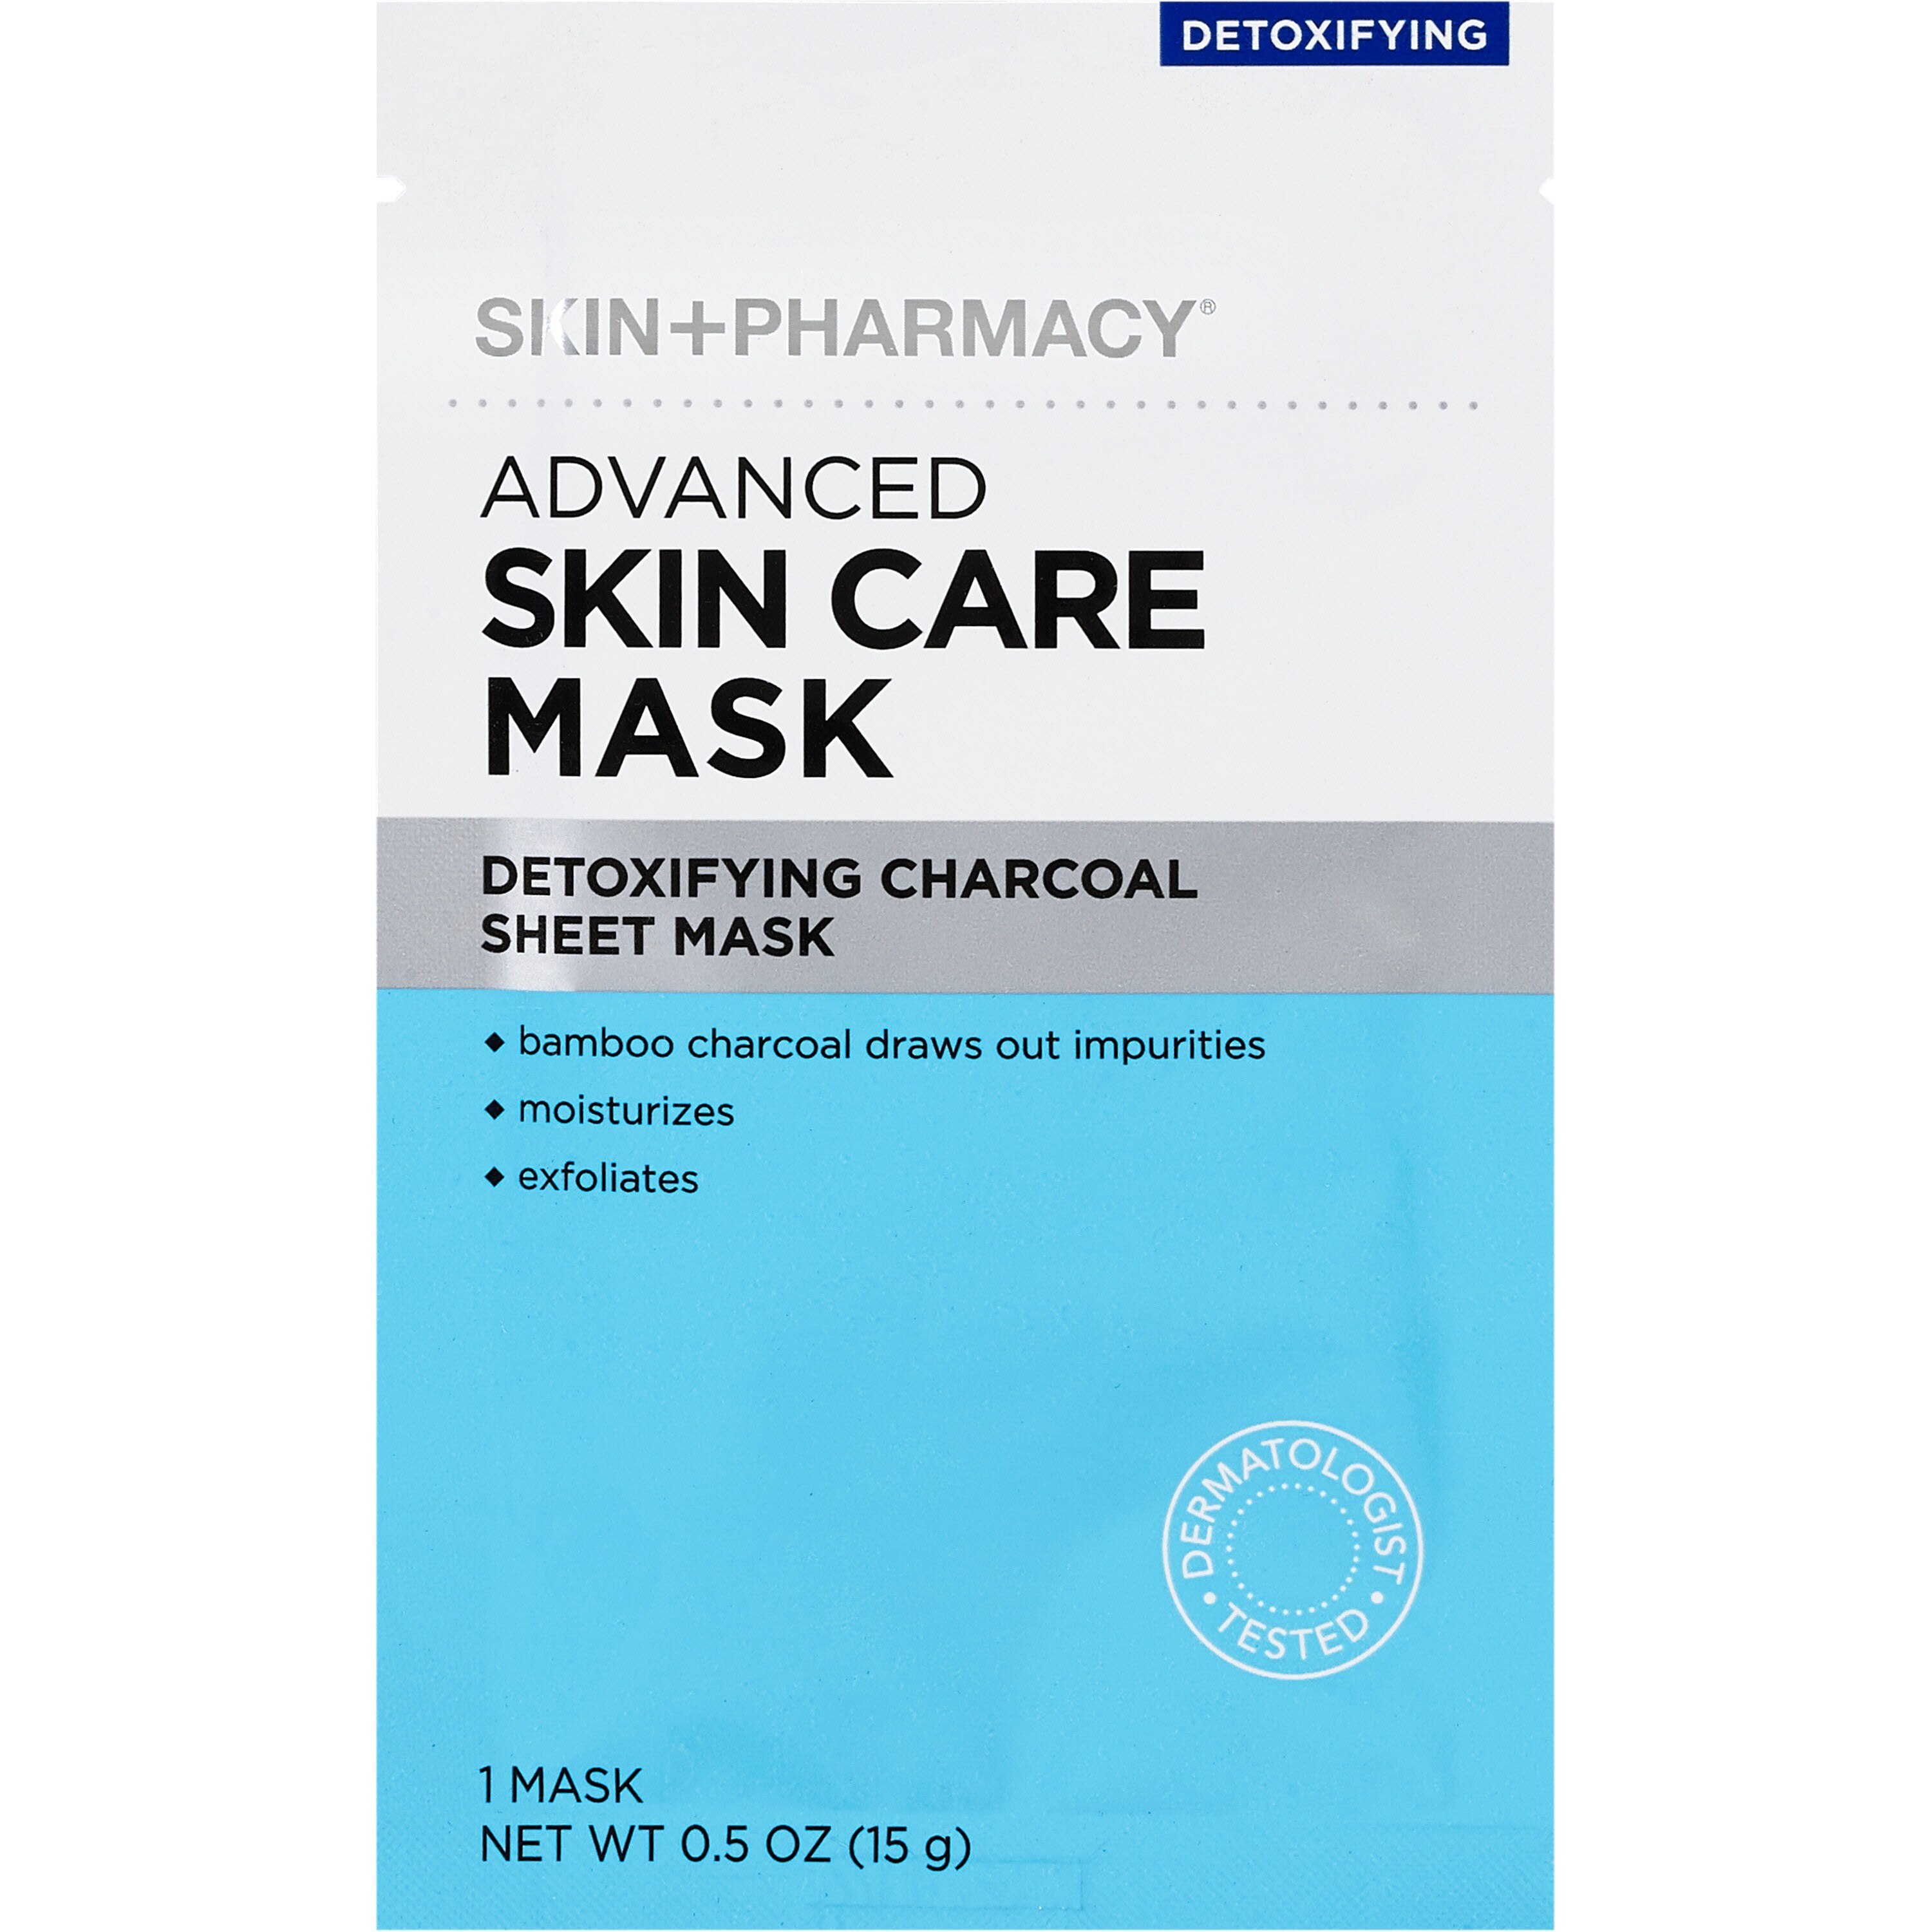 Skin + Pharmacy Detoxifying Charcoal Sheet Mask